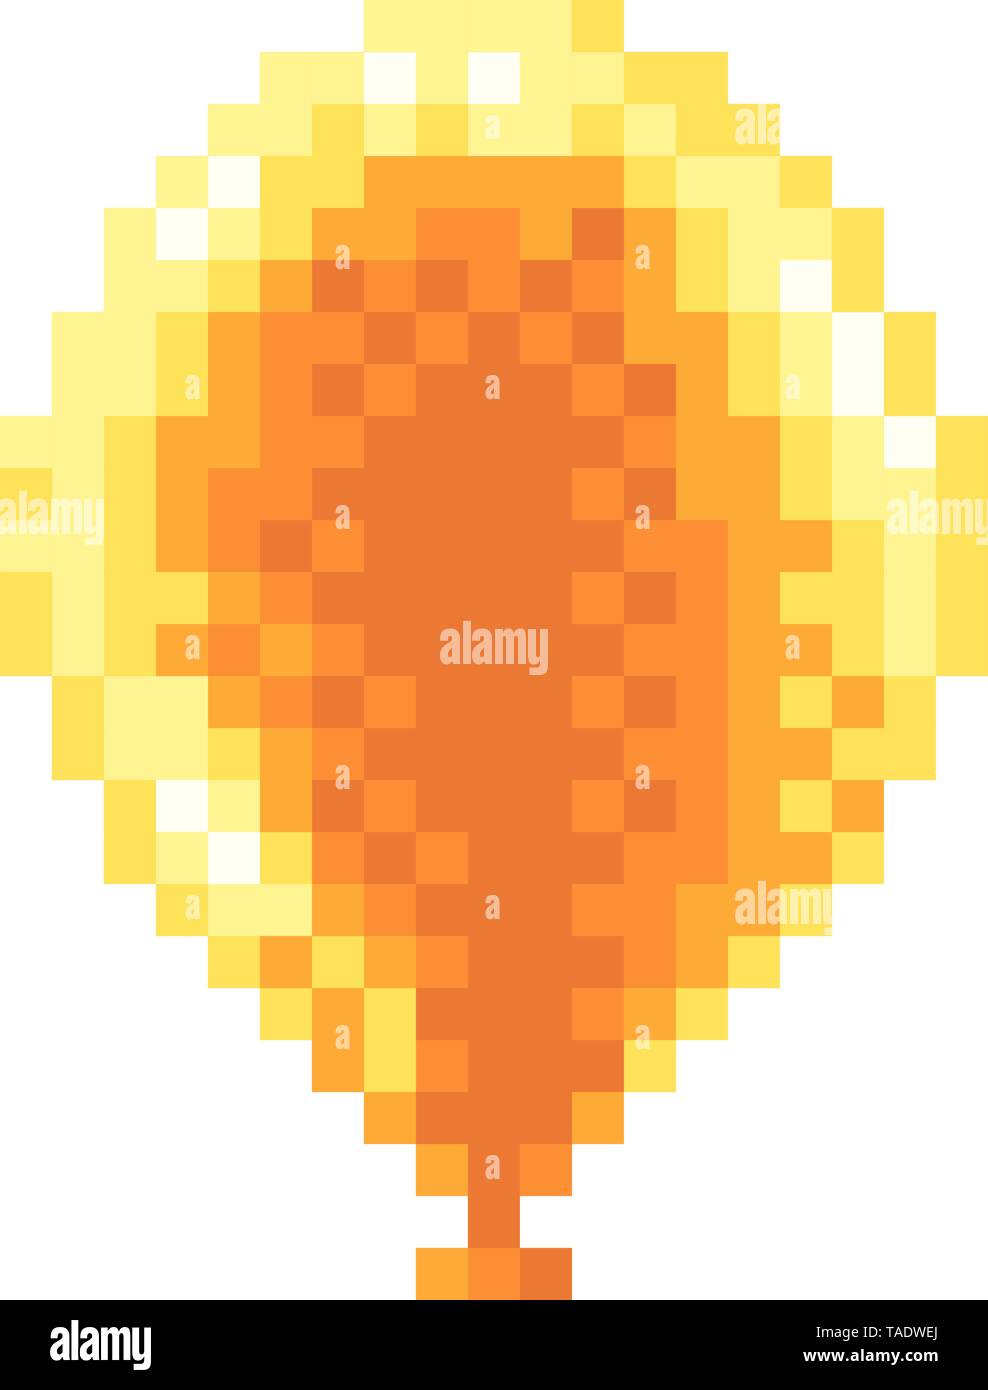 Arcade Video Game Pixel Art 8 Bit Balloon Icon Stock Vector